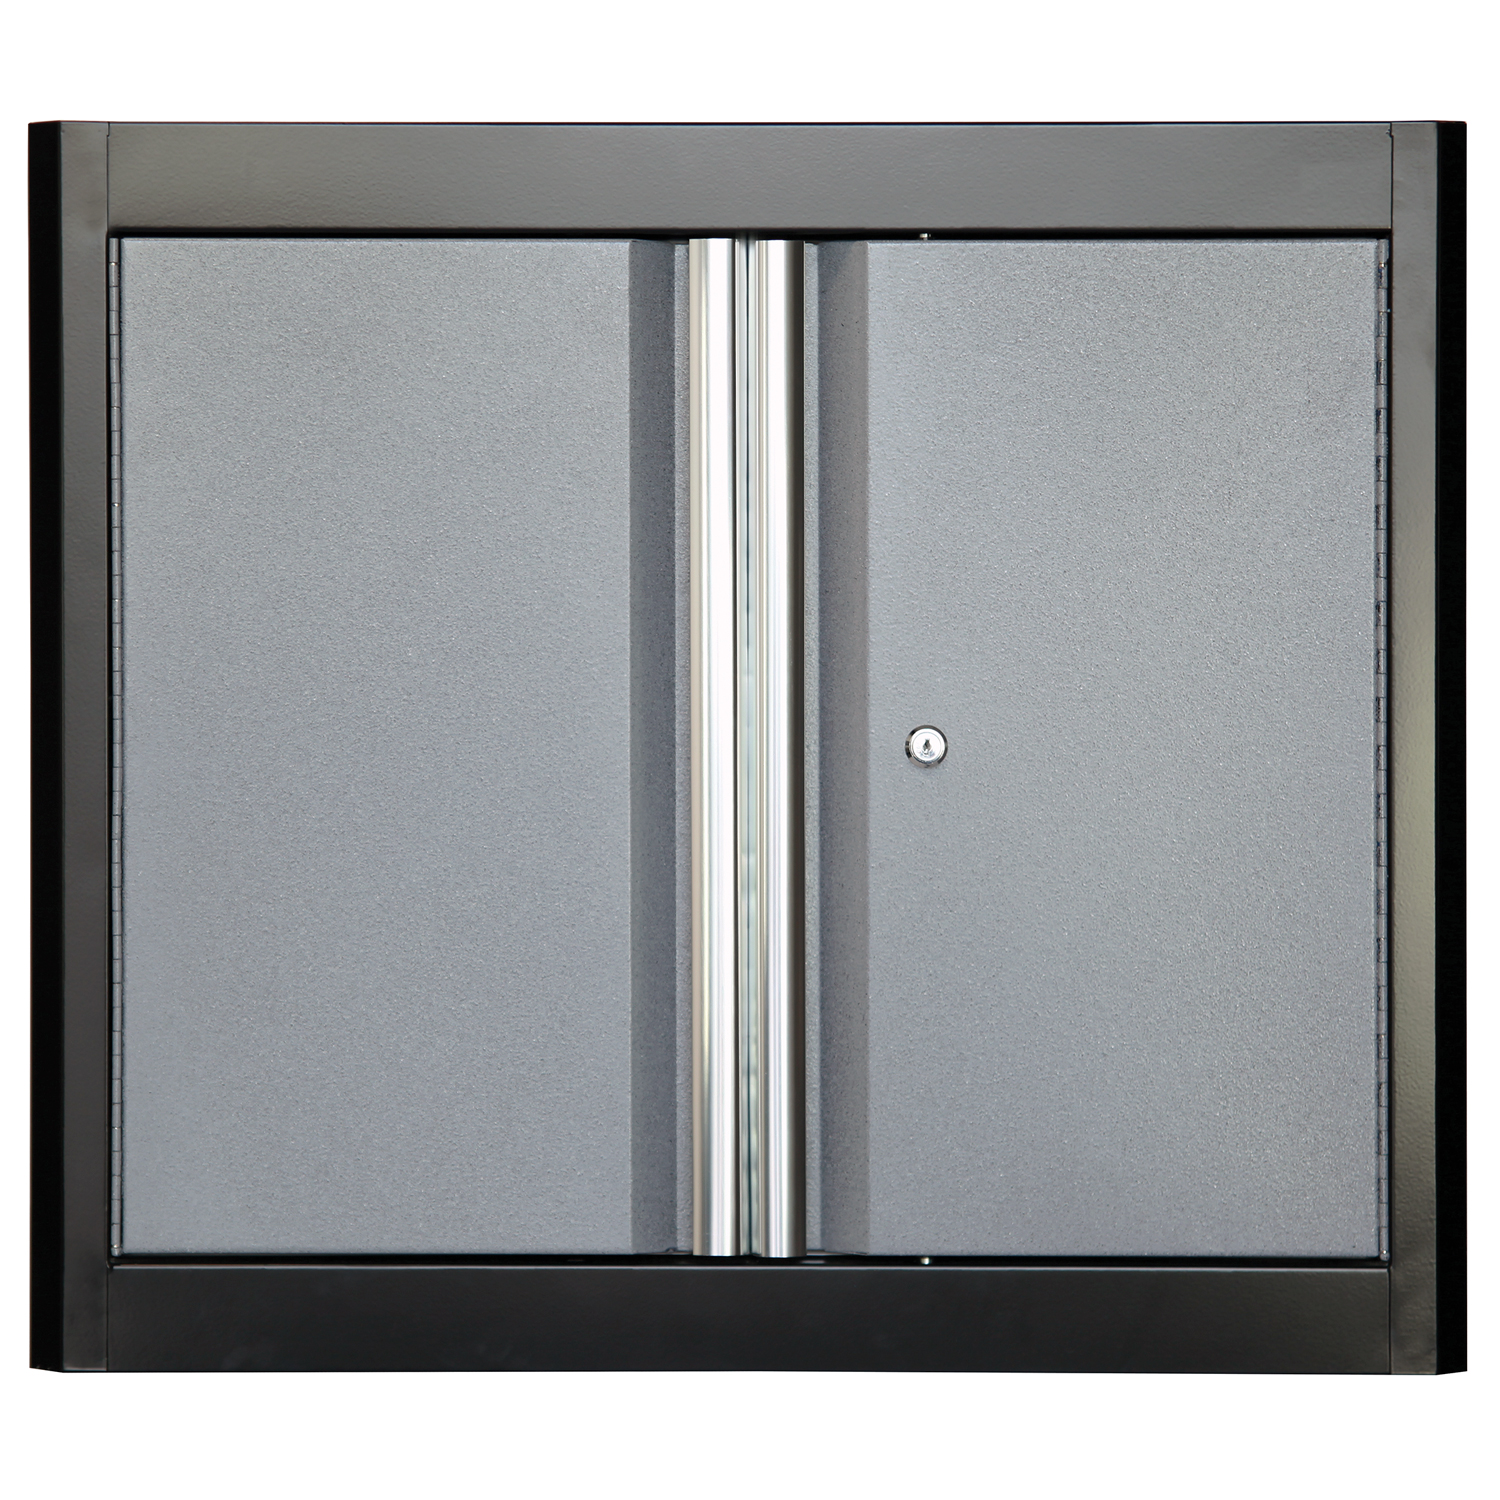 75 in. H x 210 in. W x 18 in. D Welded Steel Garage Storage System in Black/Multi-Granite (11-Piece) - image 2 of 17